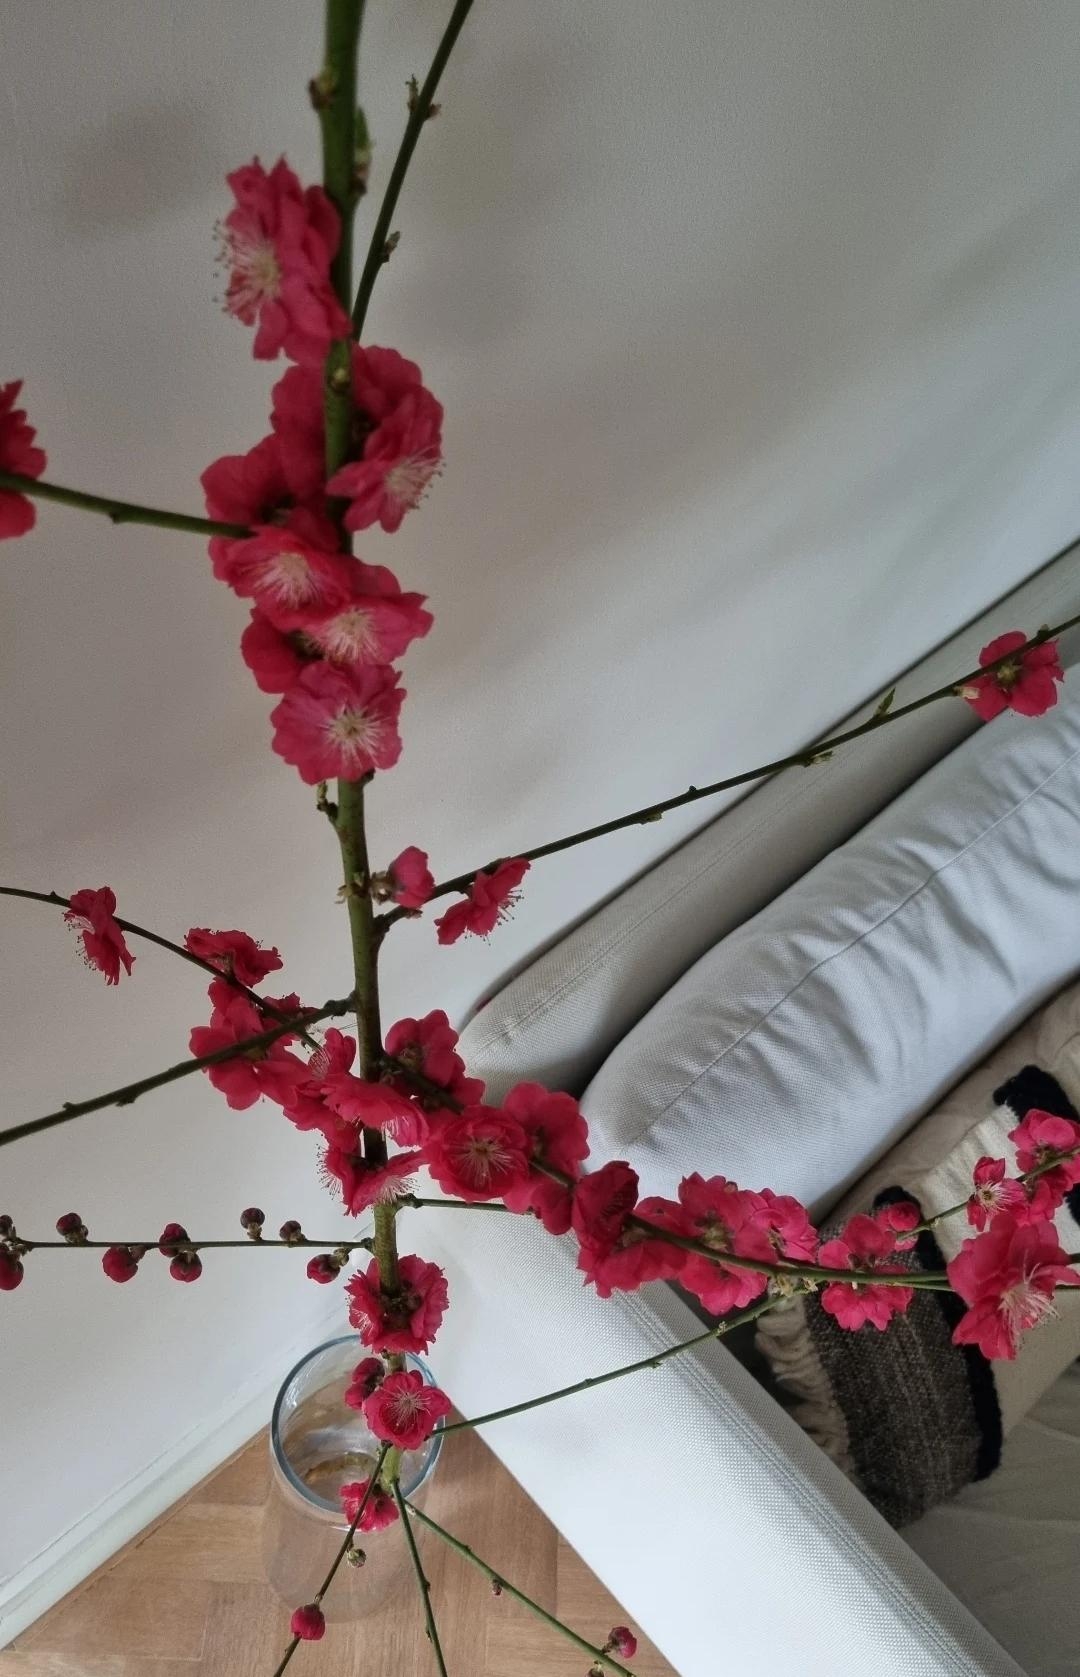 #blütentraum #blüten #kirschblüten #zweige #dekomitzweigen #dekoinspo #frühling #frühlingimhaus